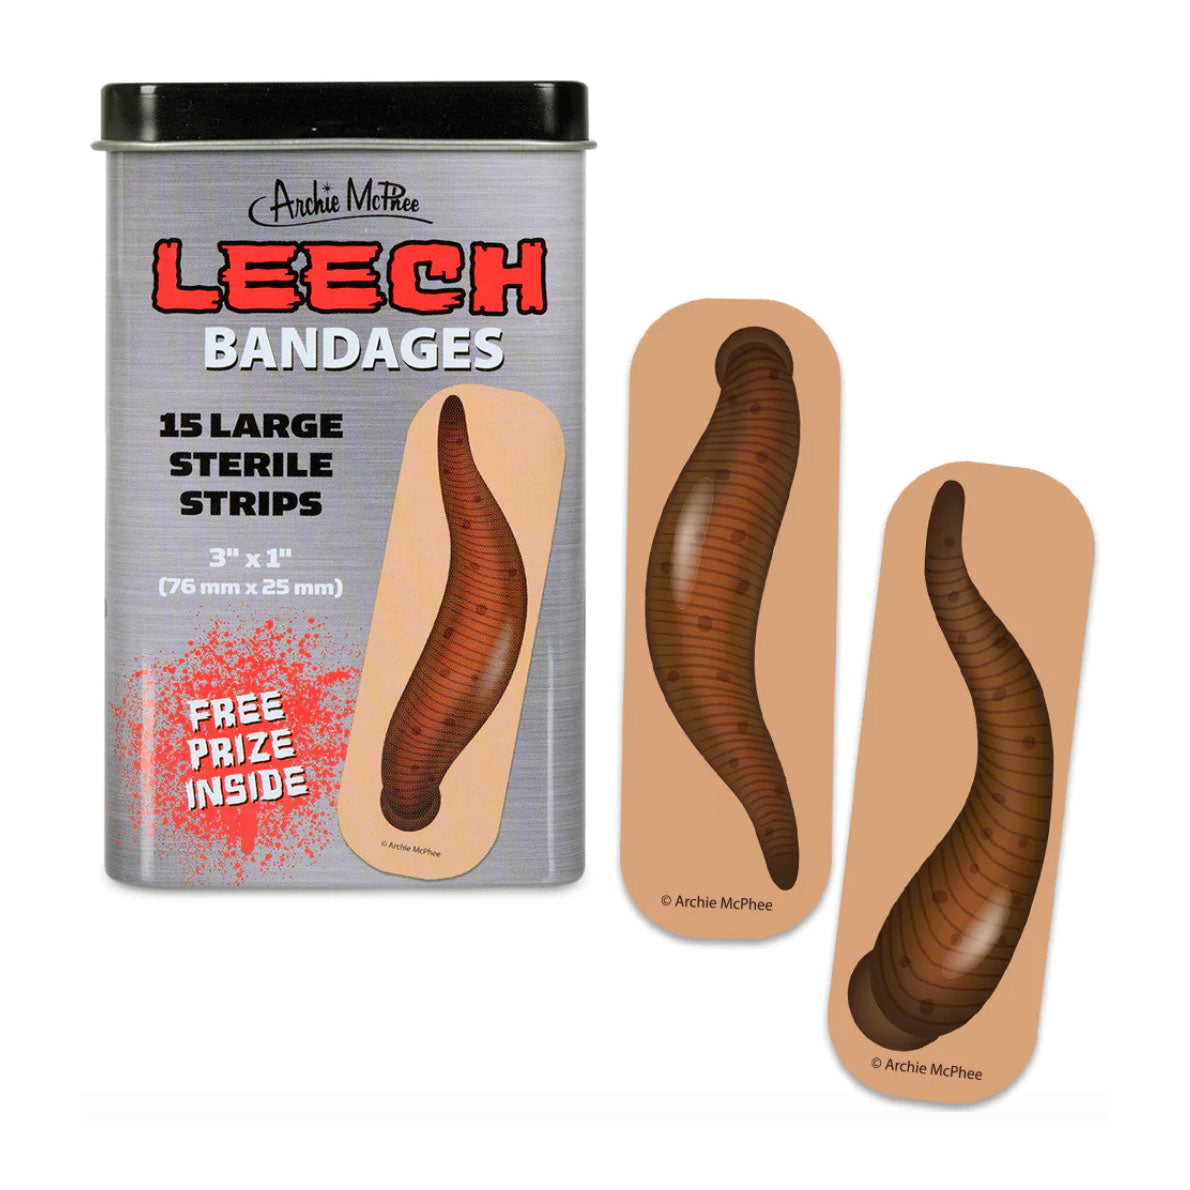 Leech Plasters/Bandages